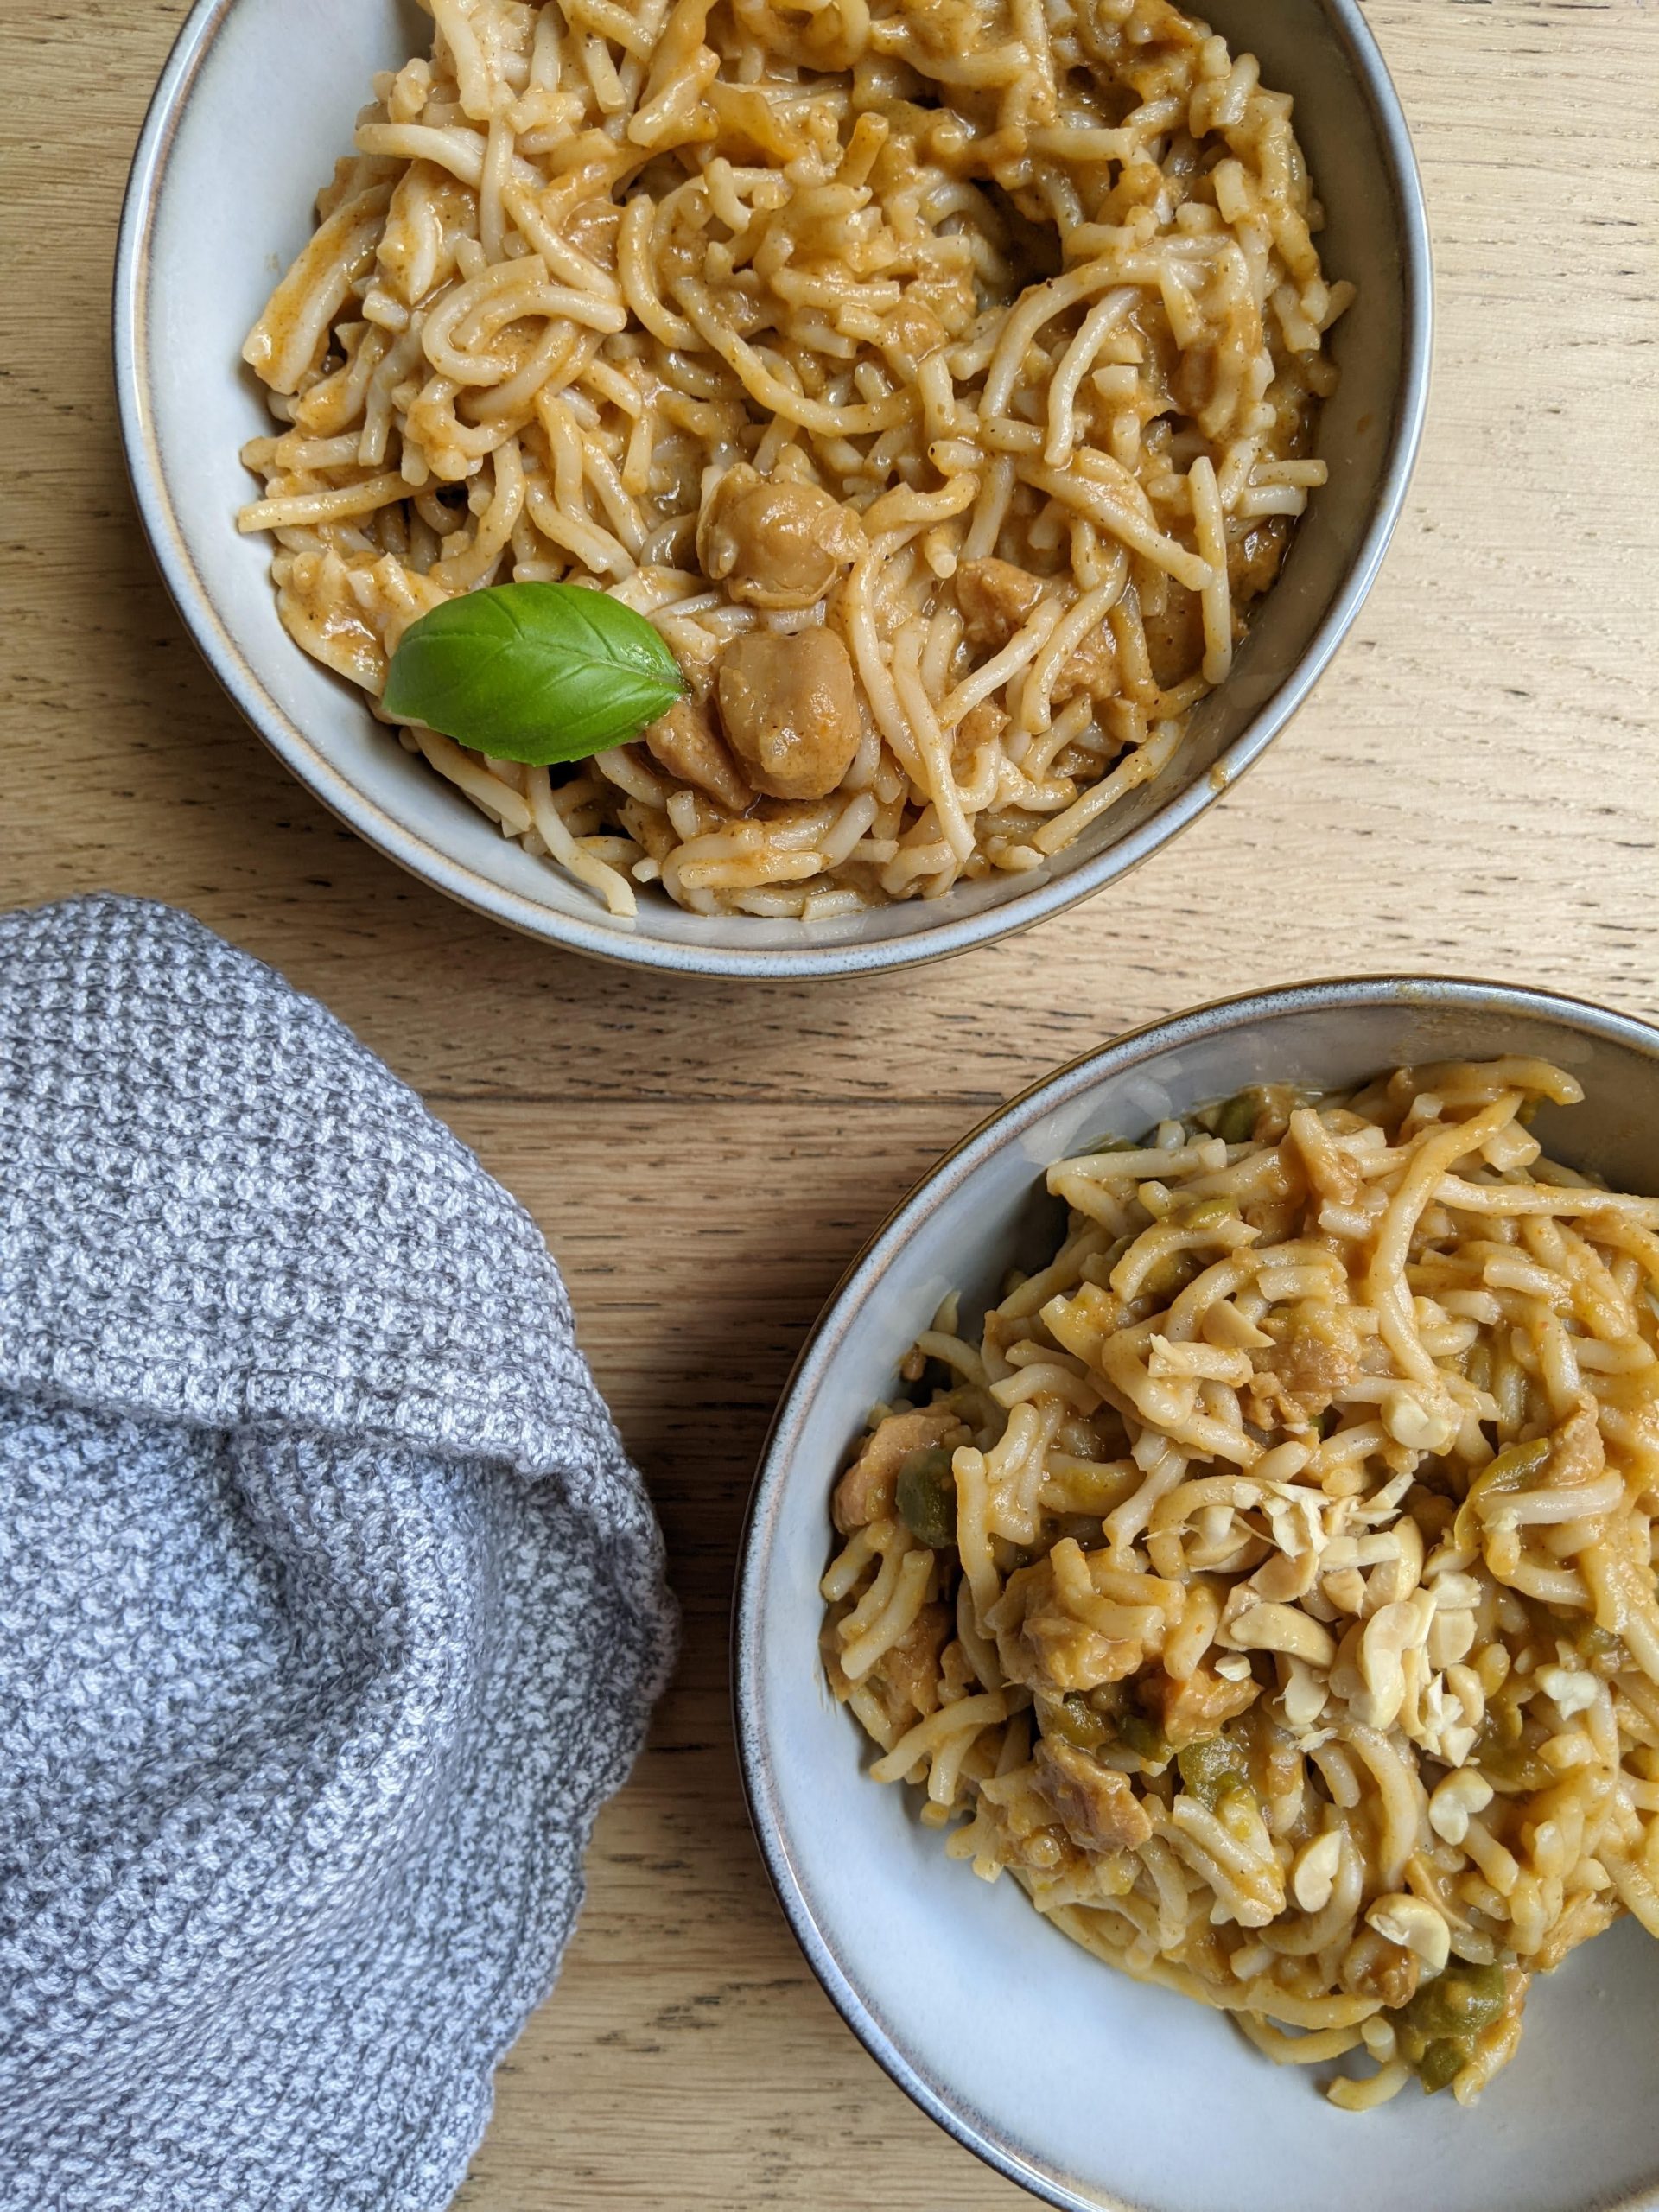 Aldi instant noodle kits - Kati Keksi